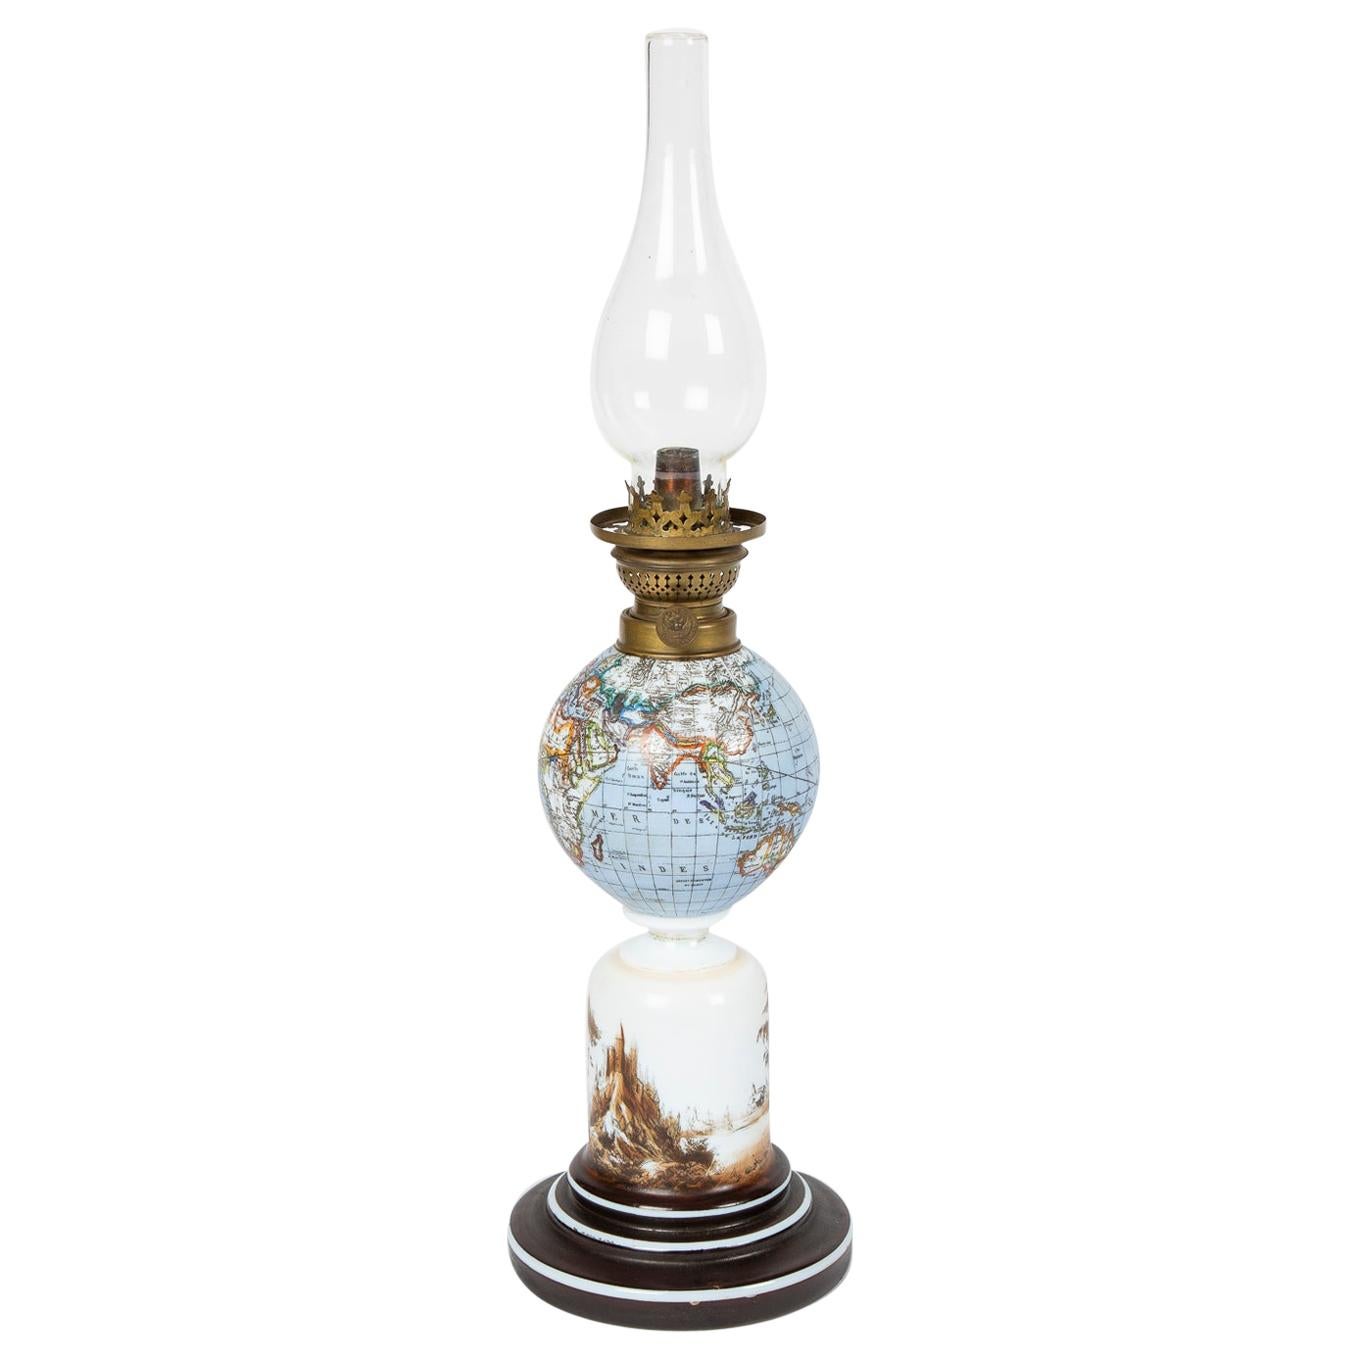 Oil Lamp with an Illuminating Globe Shade, circa 1885